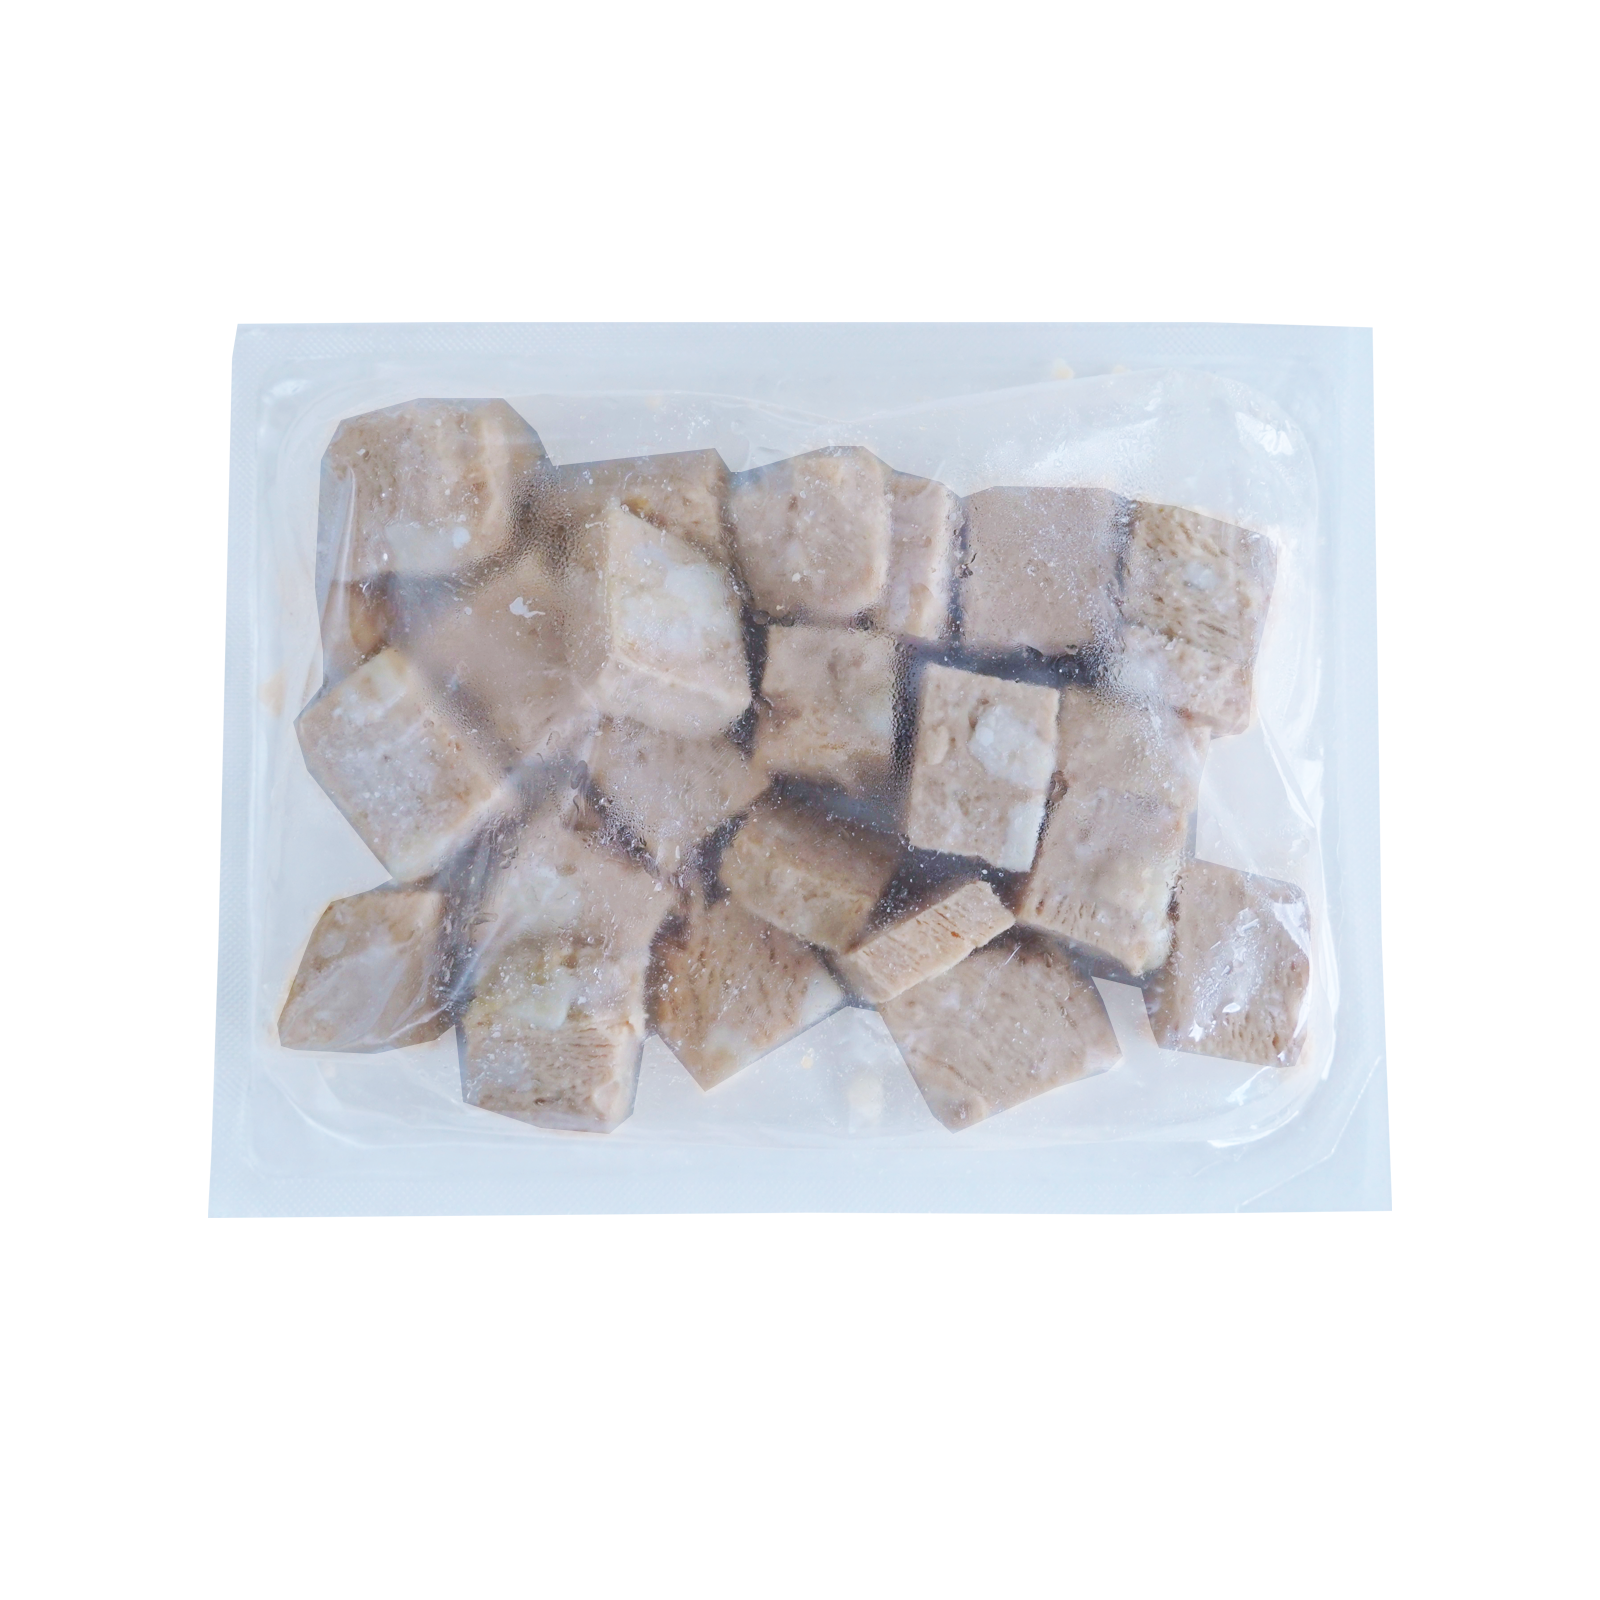 All-Natural Sugar-Free Free-Range Mortadella Cubes from the Netherlands (200g) - Horizon Farms